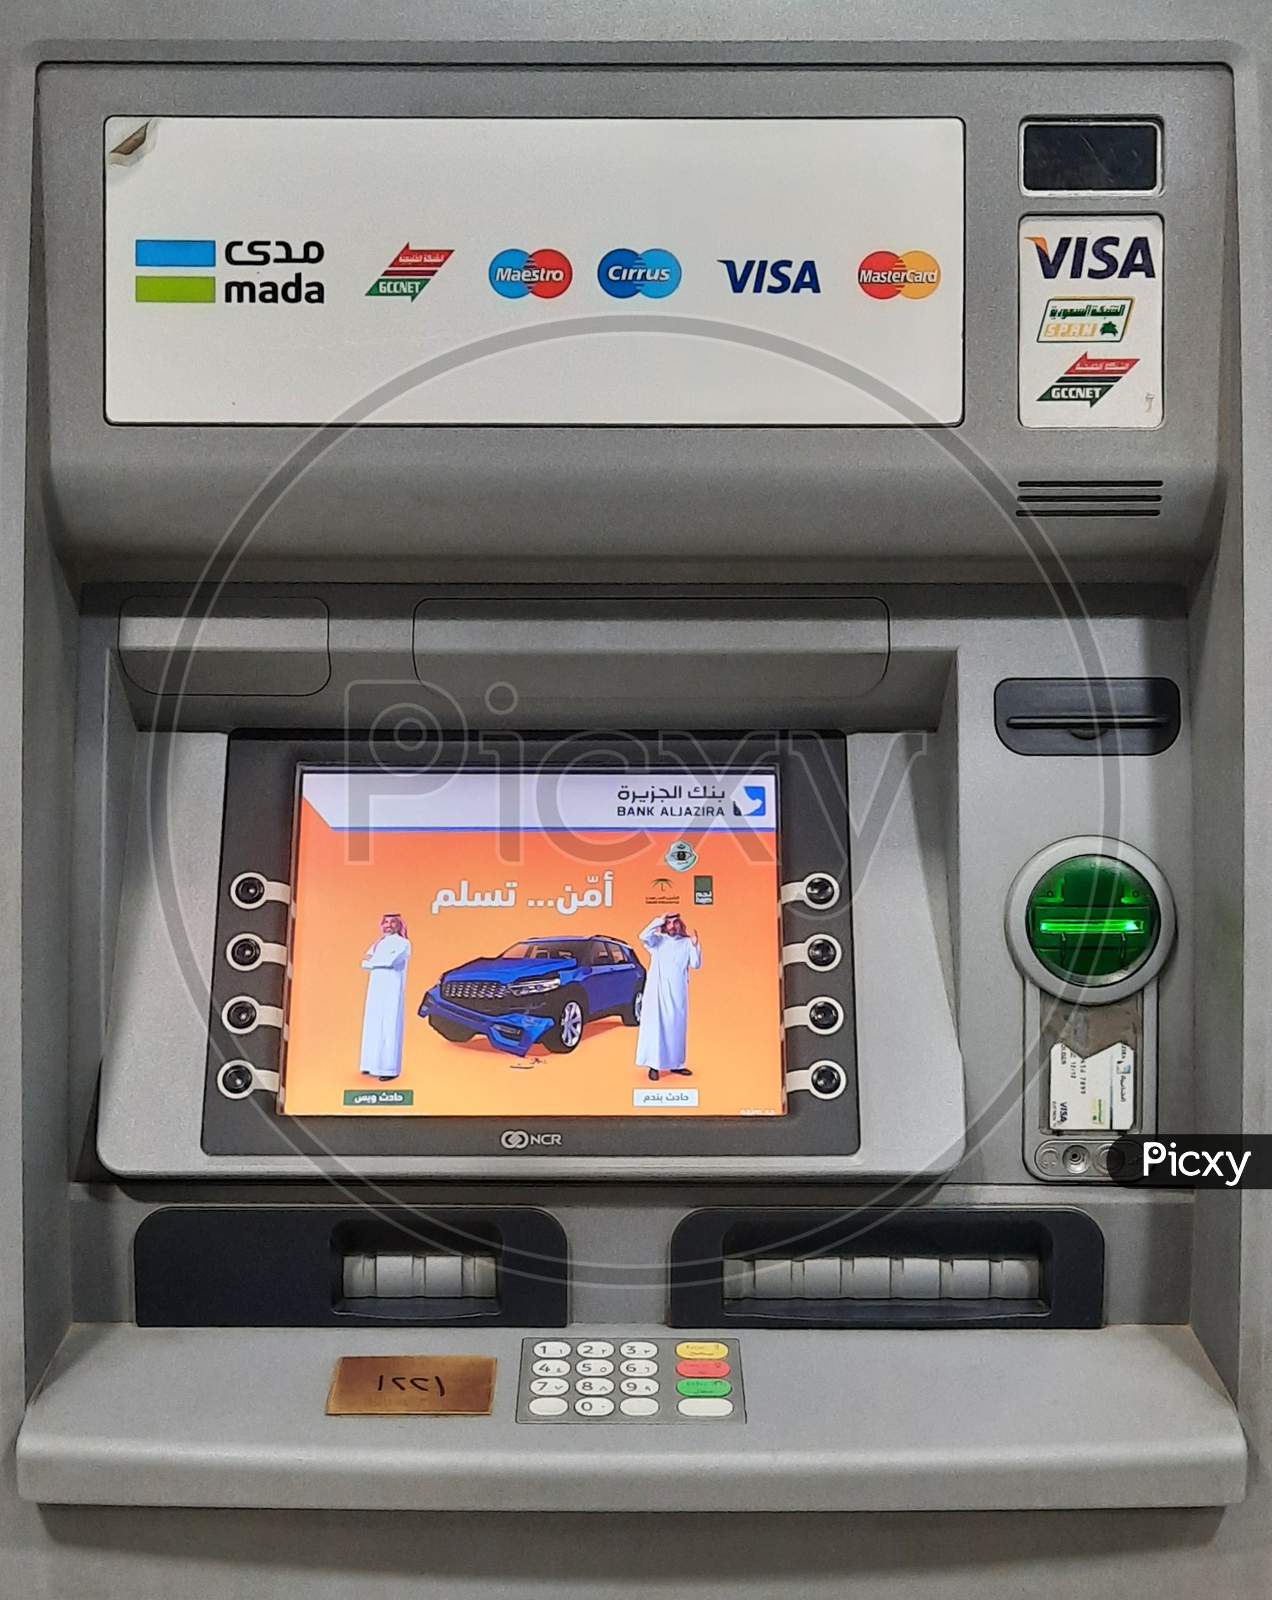 Cash money deposit atm machine